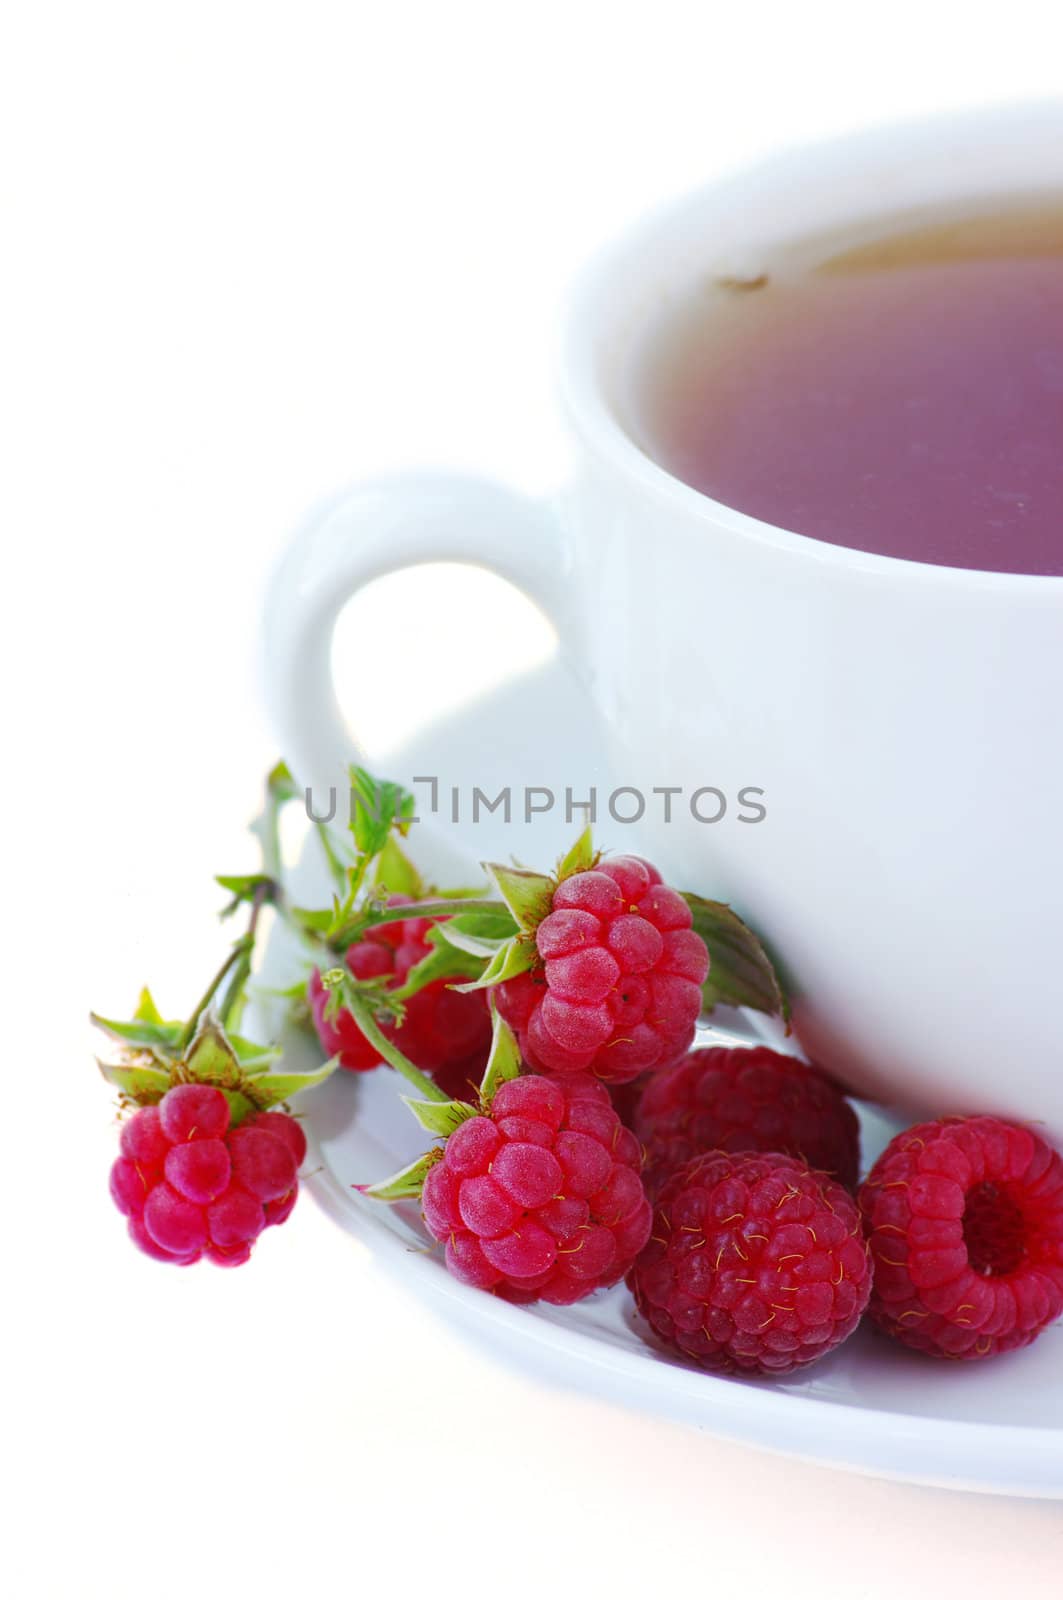 raspberry tea on the white background. Herbal tea.
